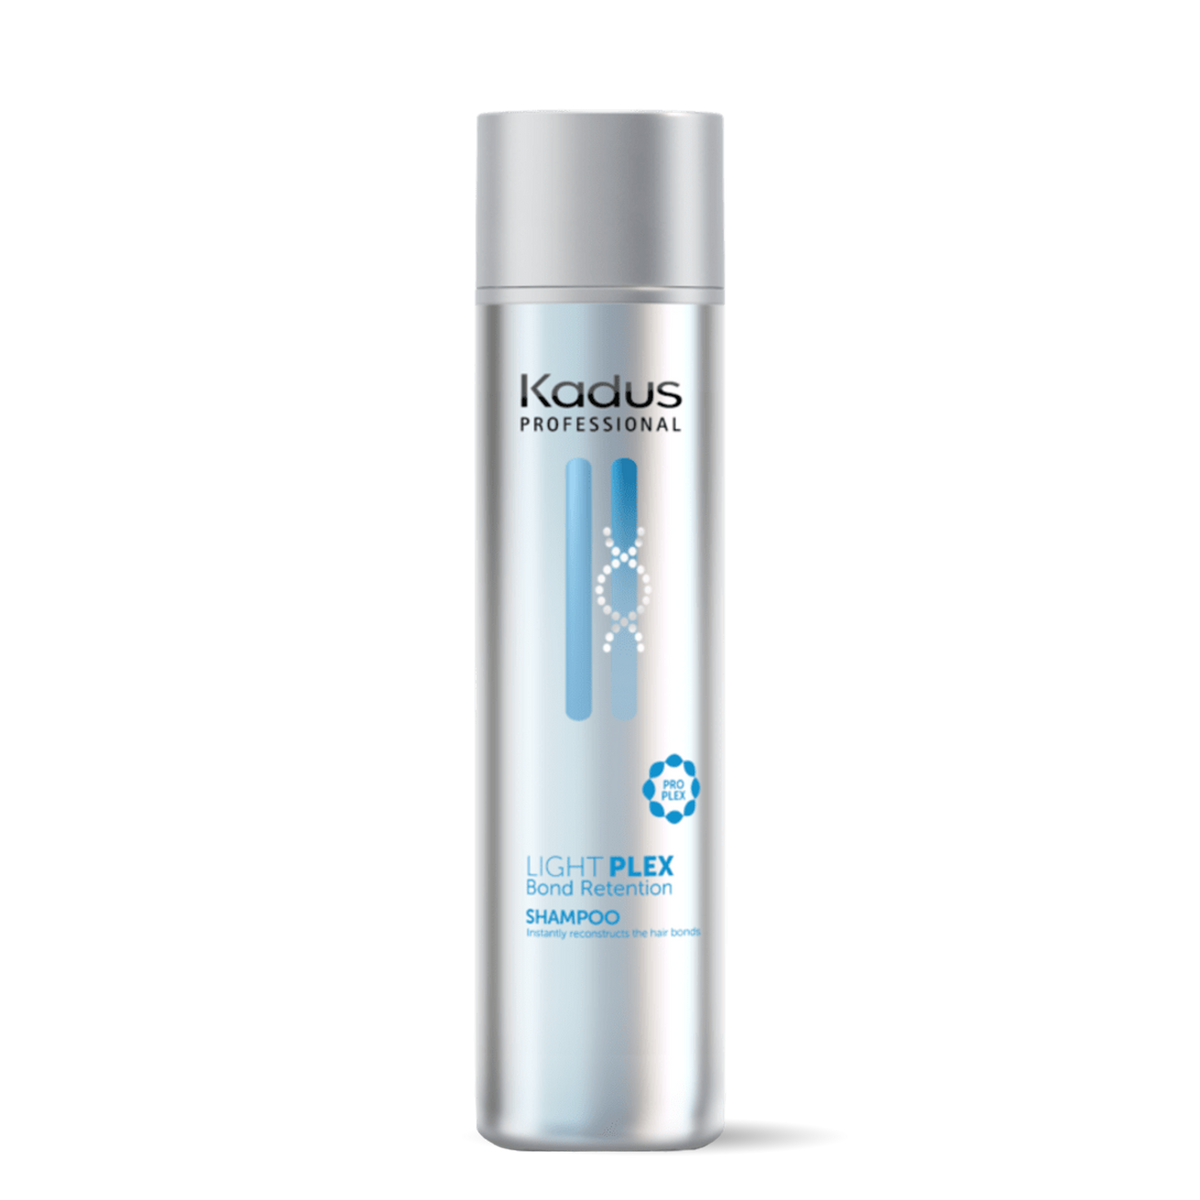 Kadus LIGHTPLEX Bond Retention Shampoo 250ml - by Kadus Professionals |ProCare Outlet|